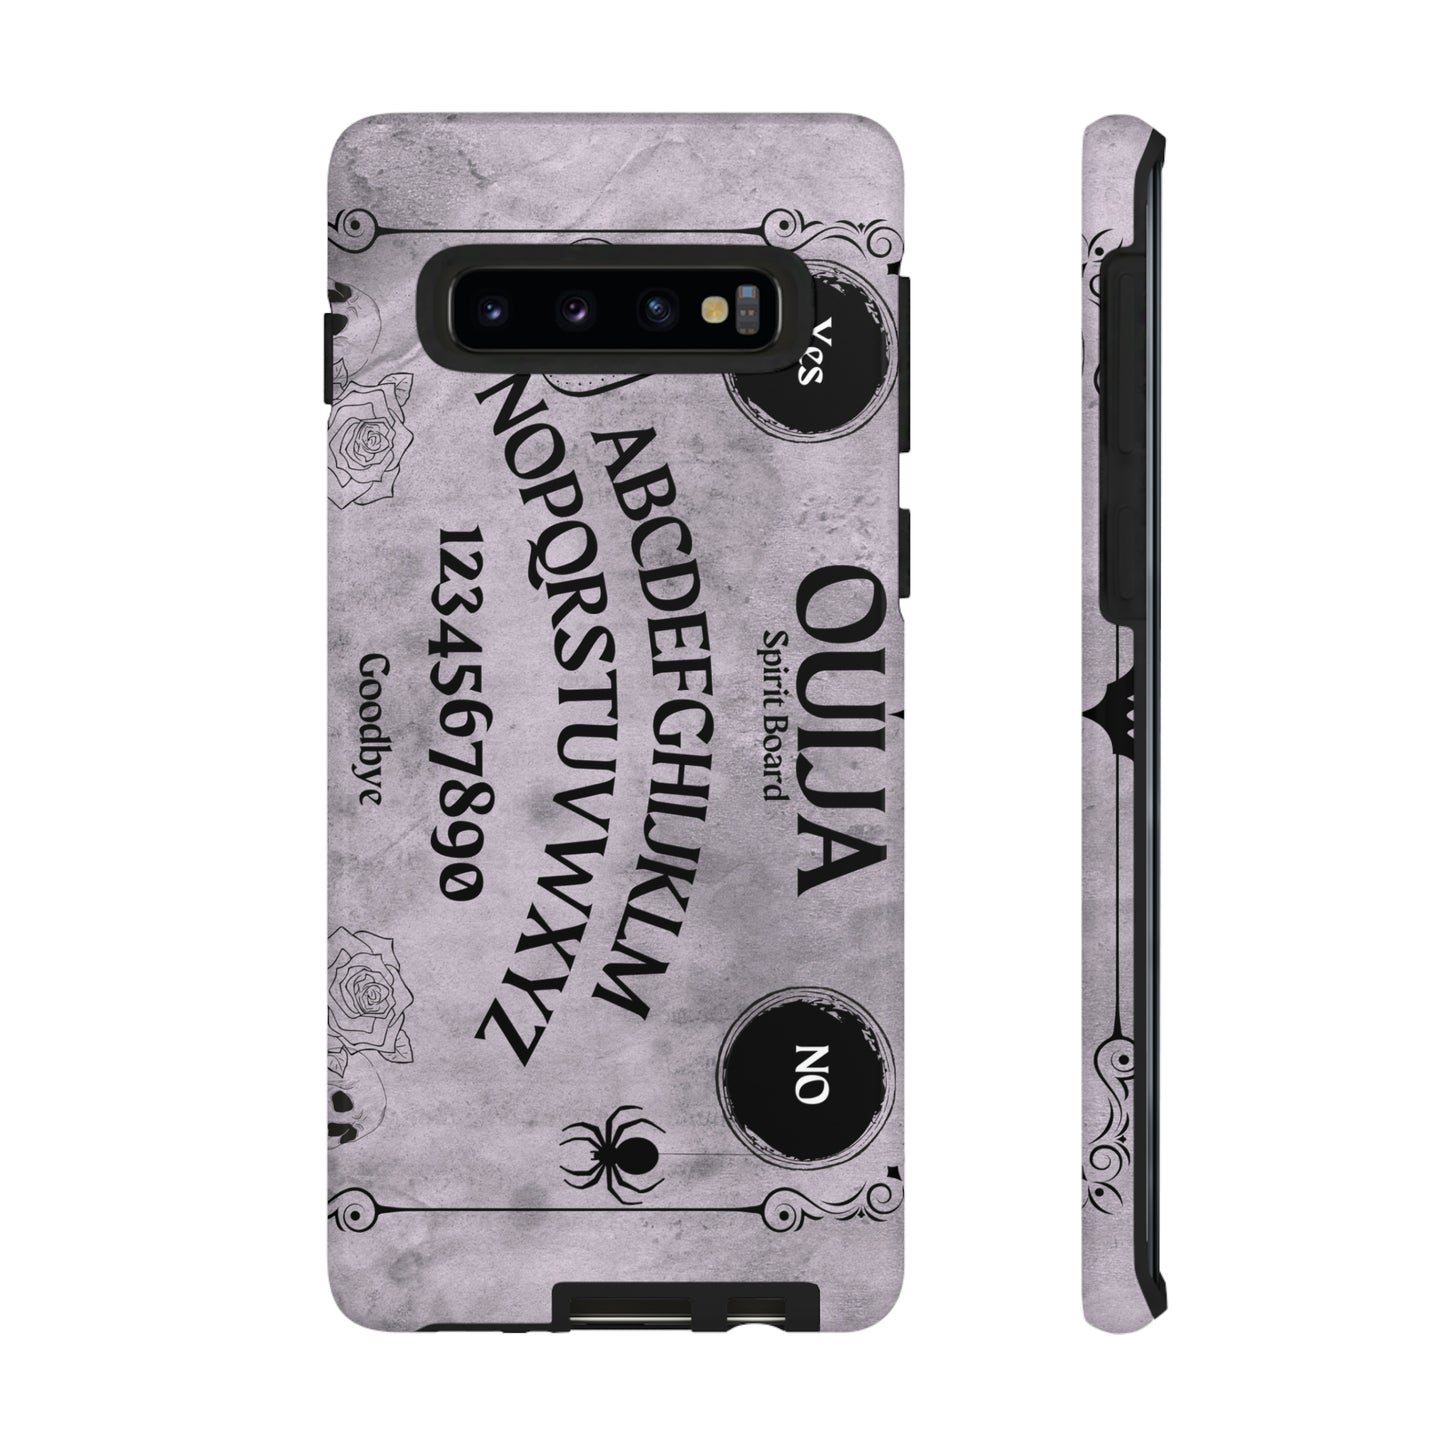 Ouija Board Tough Phone Cases For Samsung iPhone GooglePhone CaseVTZdesignsSamsung Galaxy S10GlossyAccessoriesGlossyhalloween